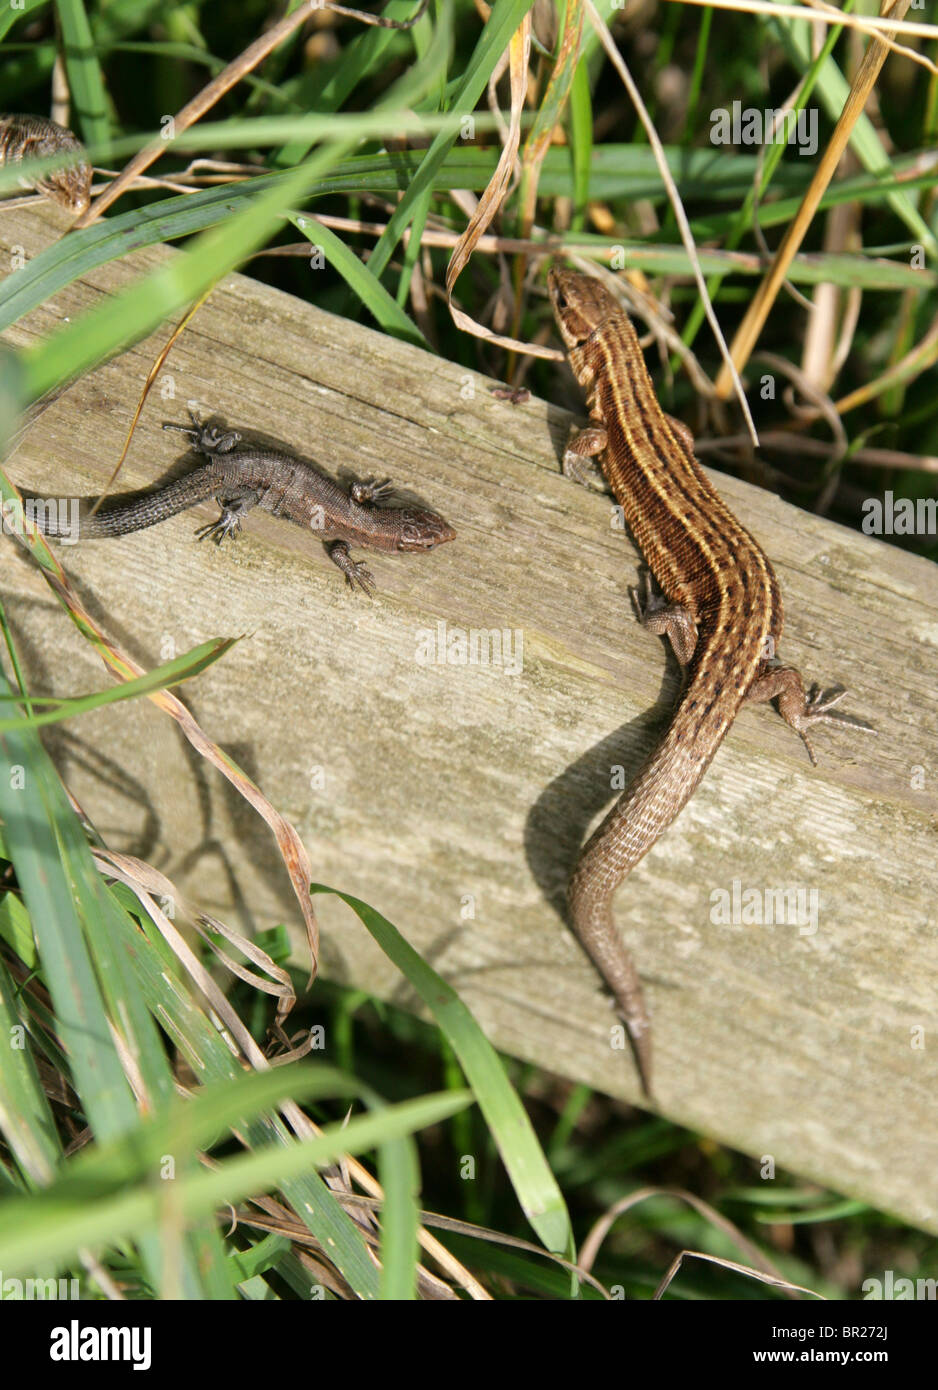 Female and Juvenile Common or Viviparous Lizard, Zootoca vivipara, Lacertidae, Lacertilia, Squamata, Reptilia. Stock Photo